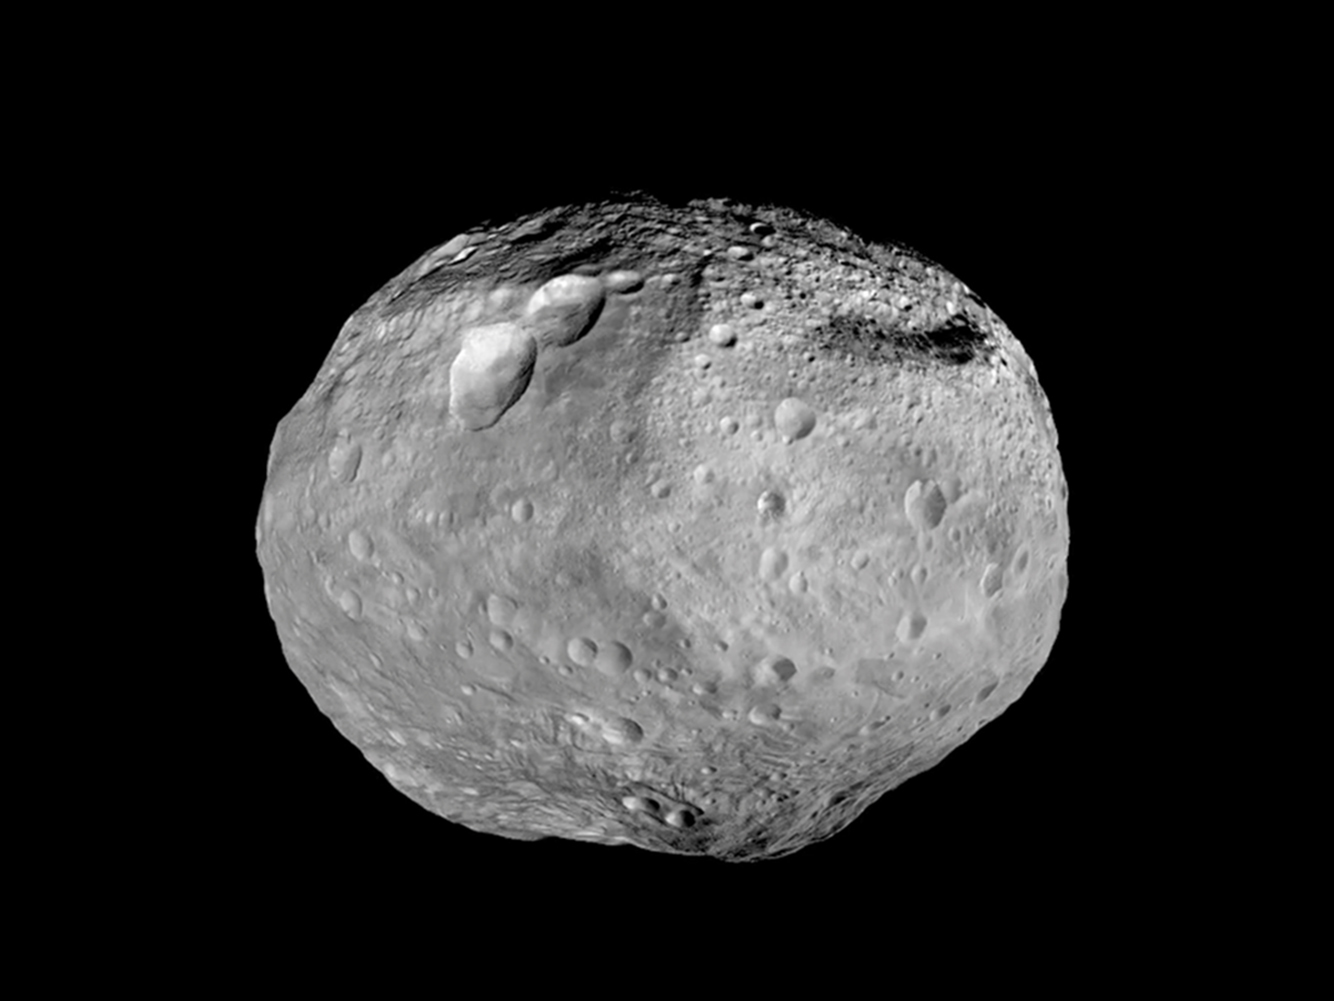 Asteroide Vesta